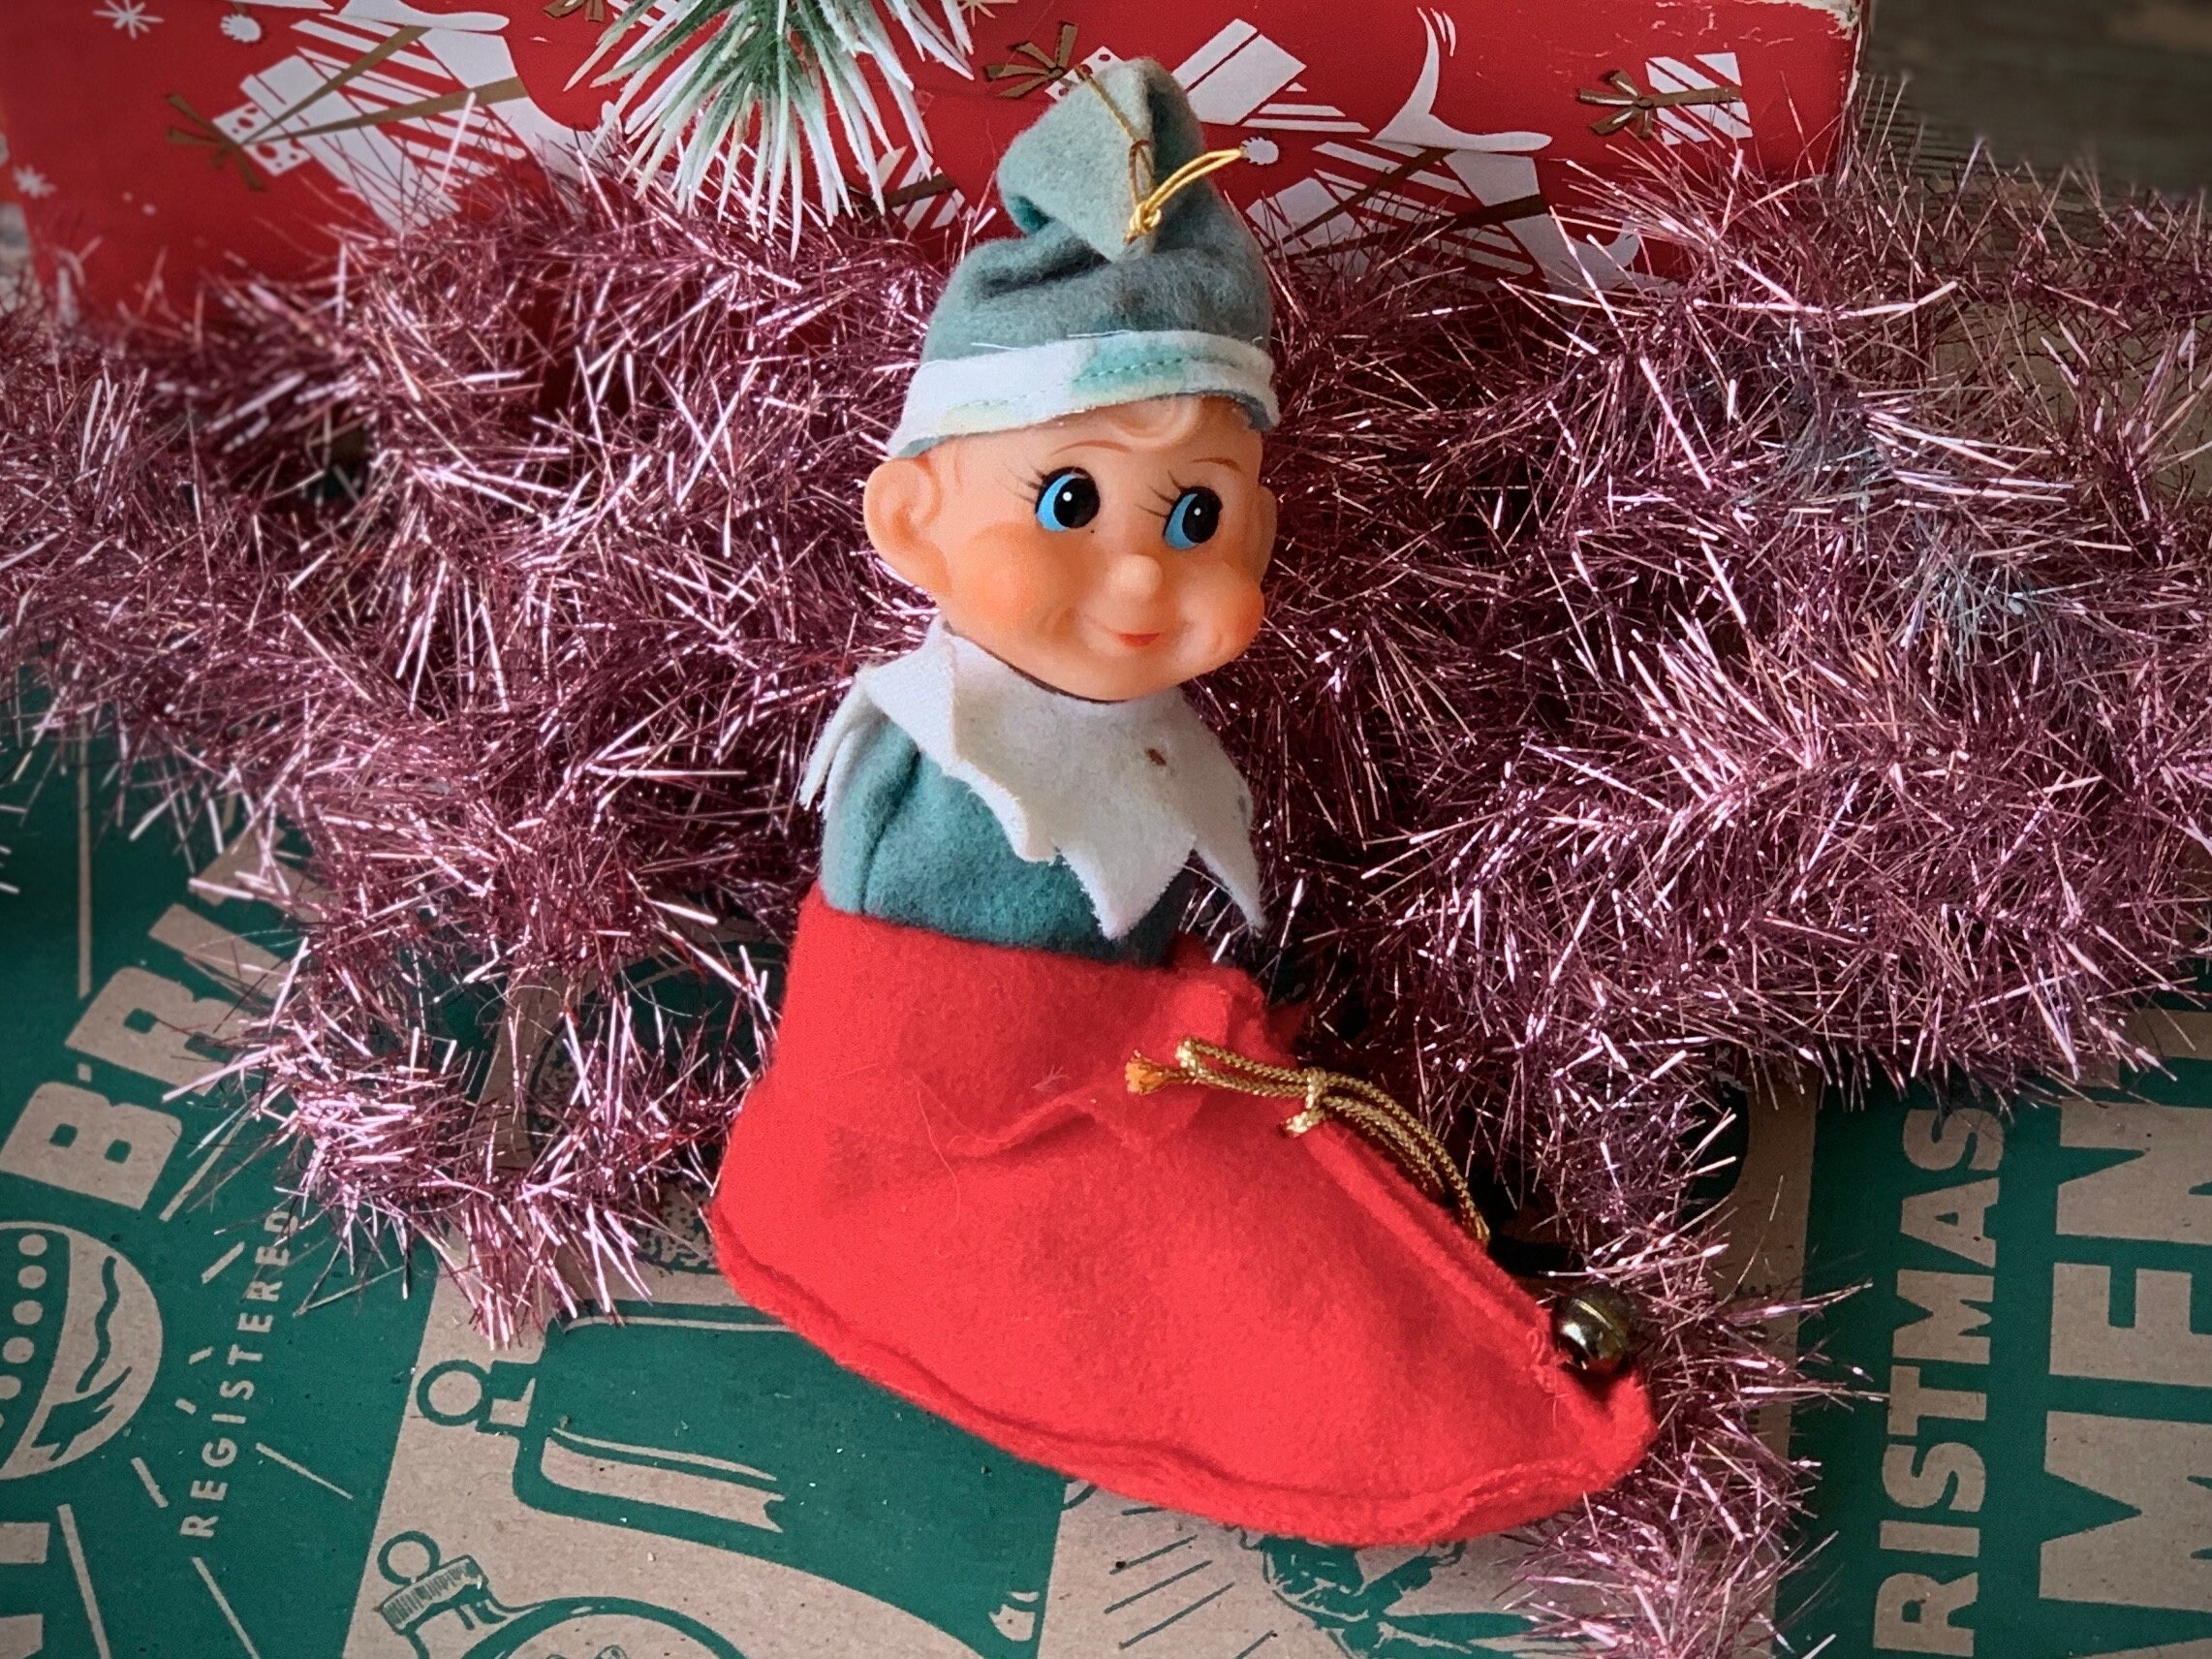 DIY Bucilla Holiday Decorating Boot Elf Santa Christmas Felt